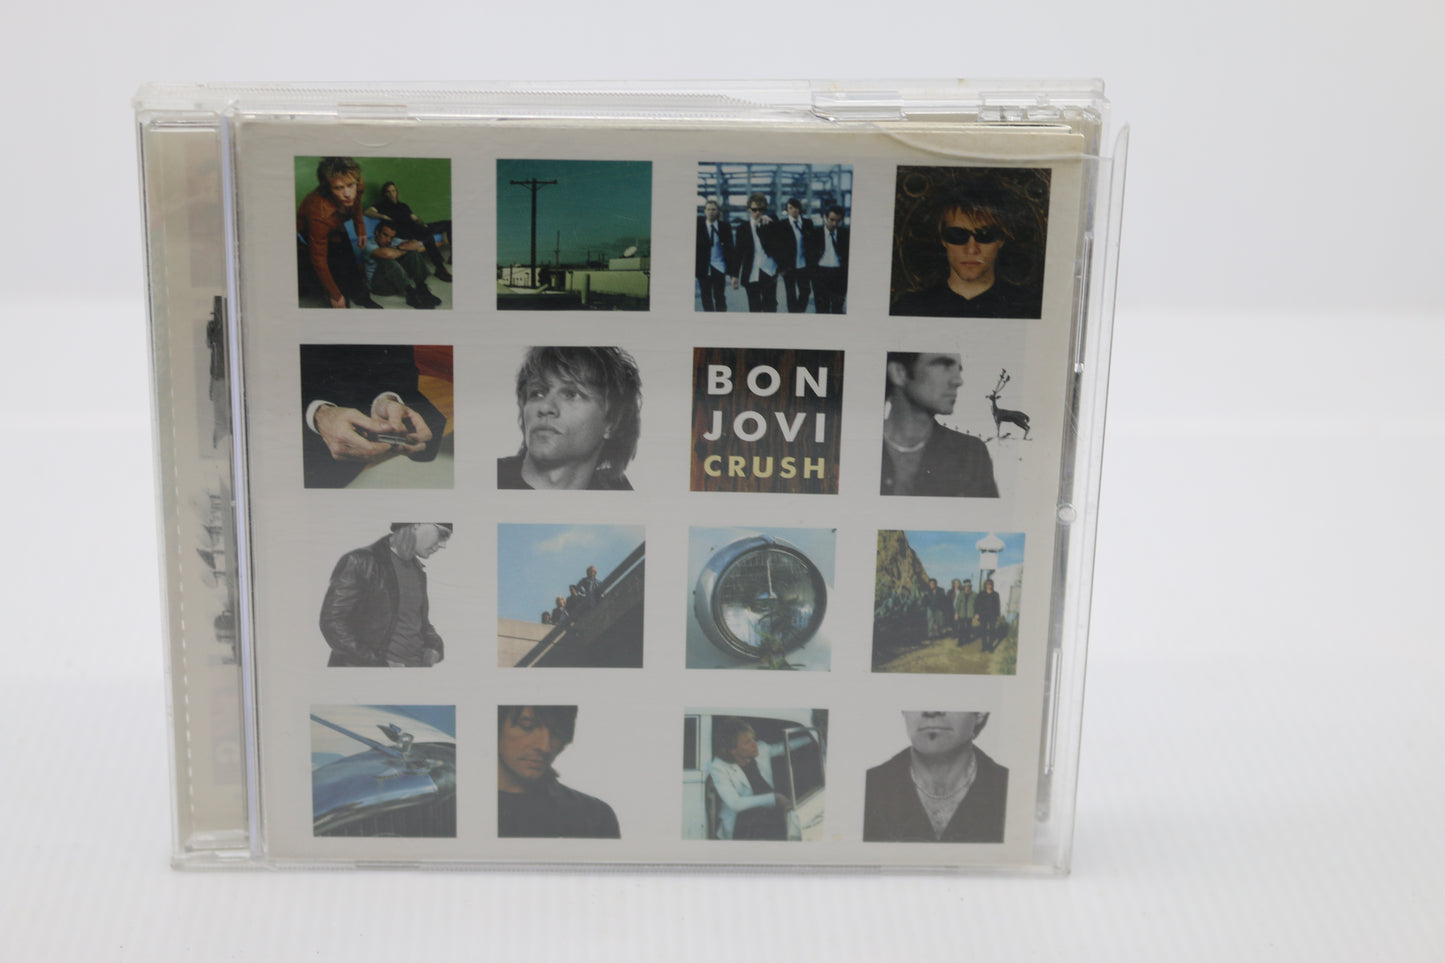 Crush by Bon Jovi (CD, 2000) Pre-Owned